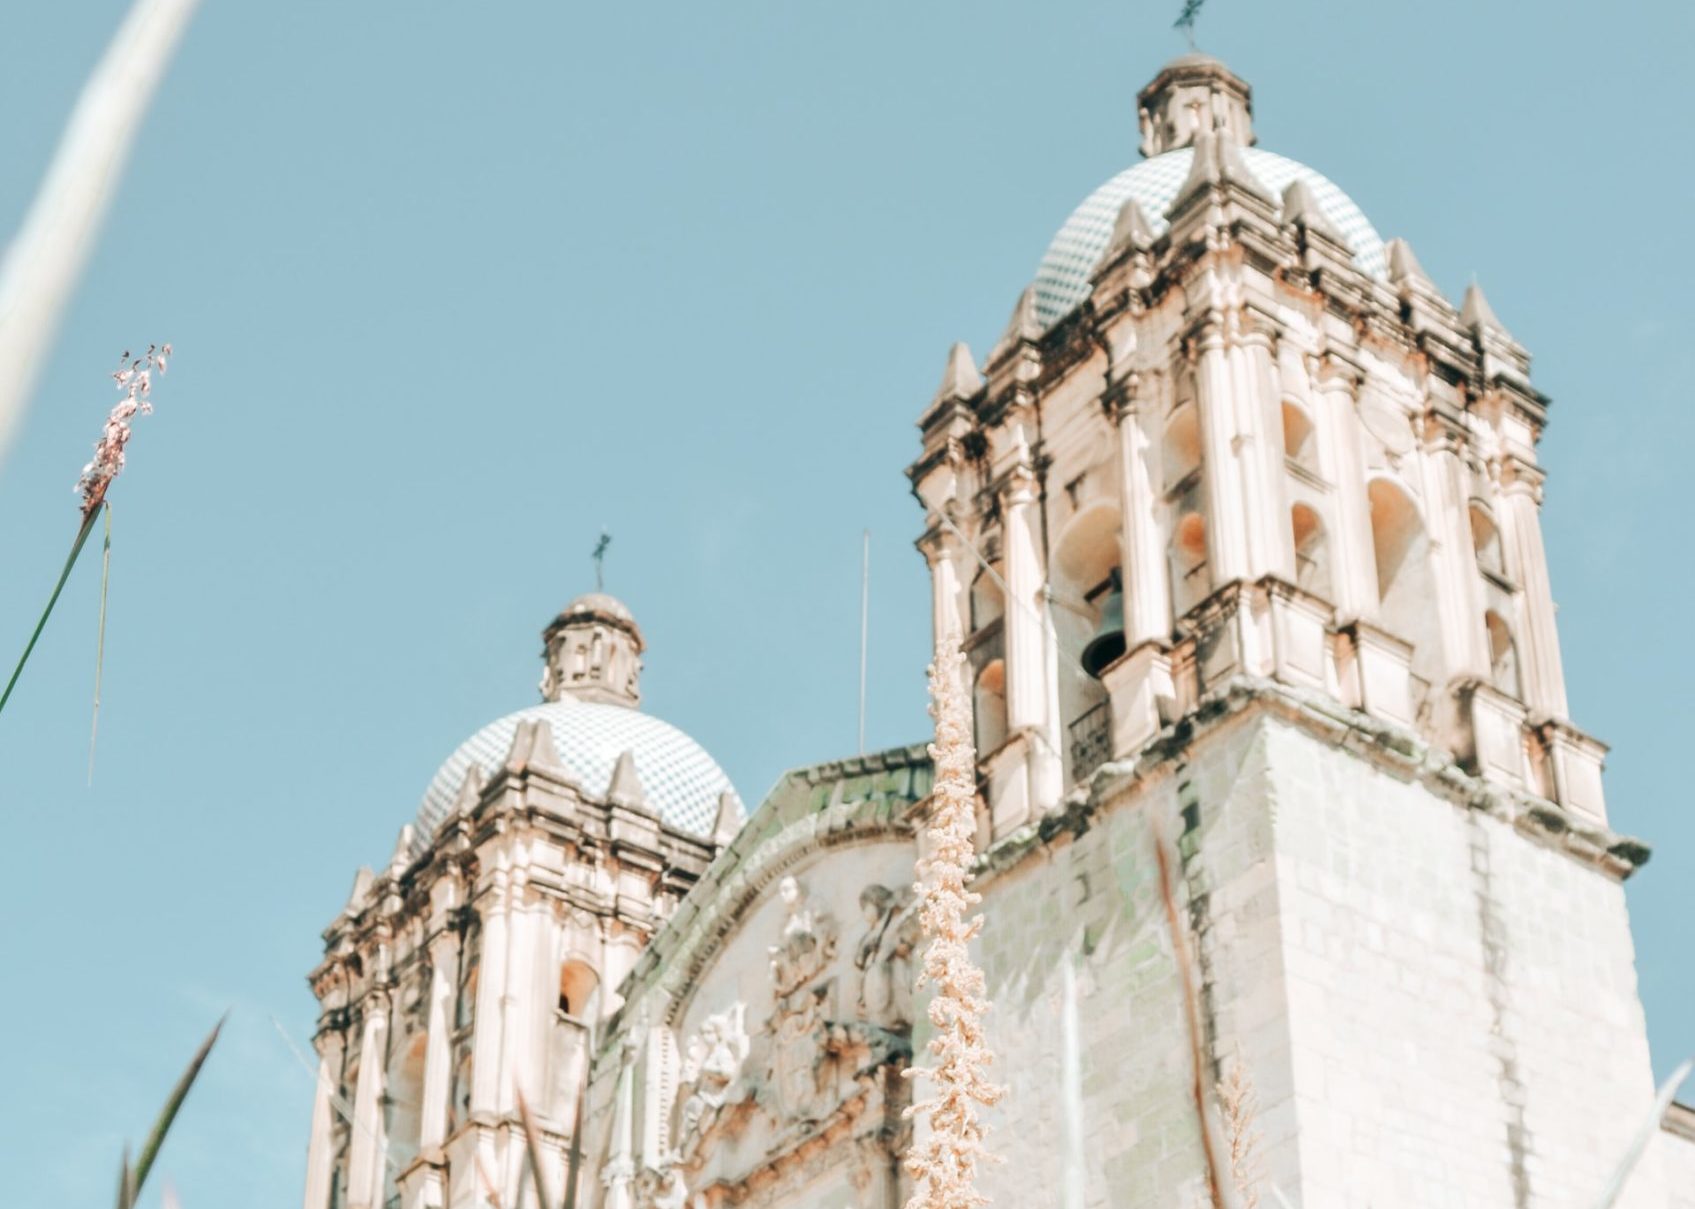 Religious building in Oaxaca, Mexico